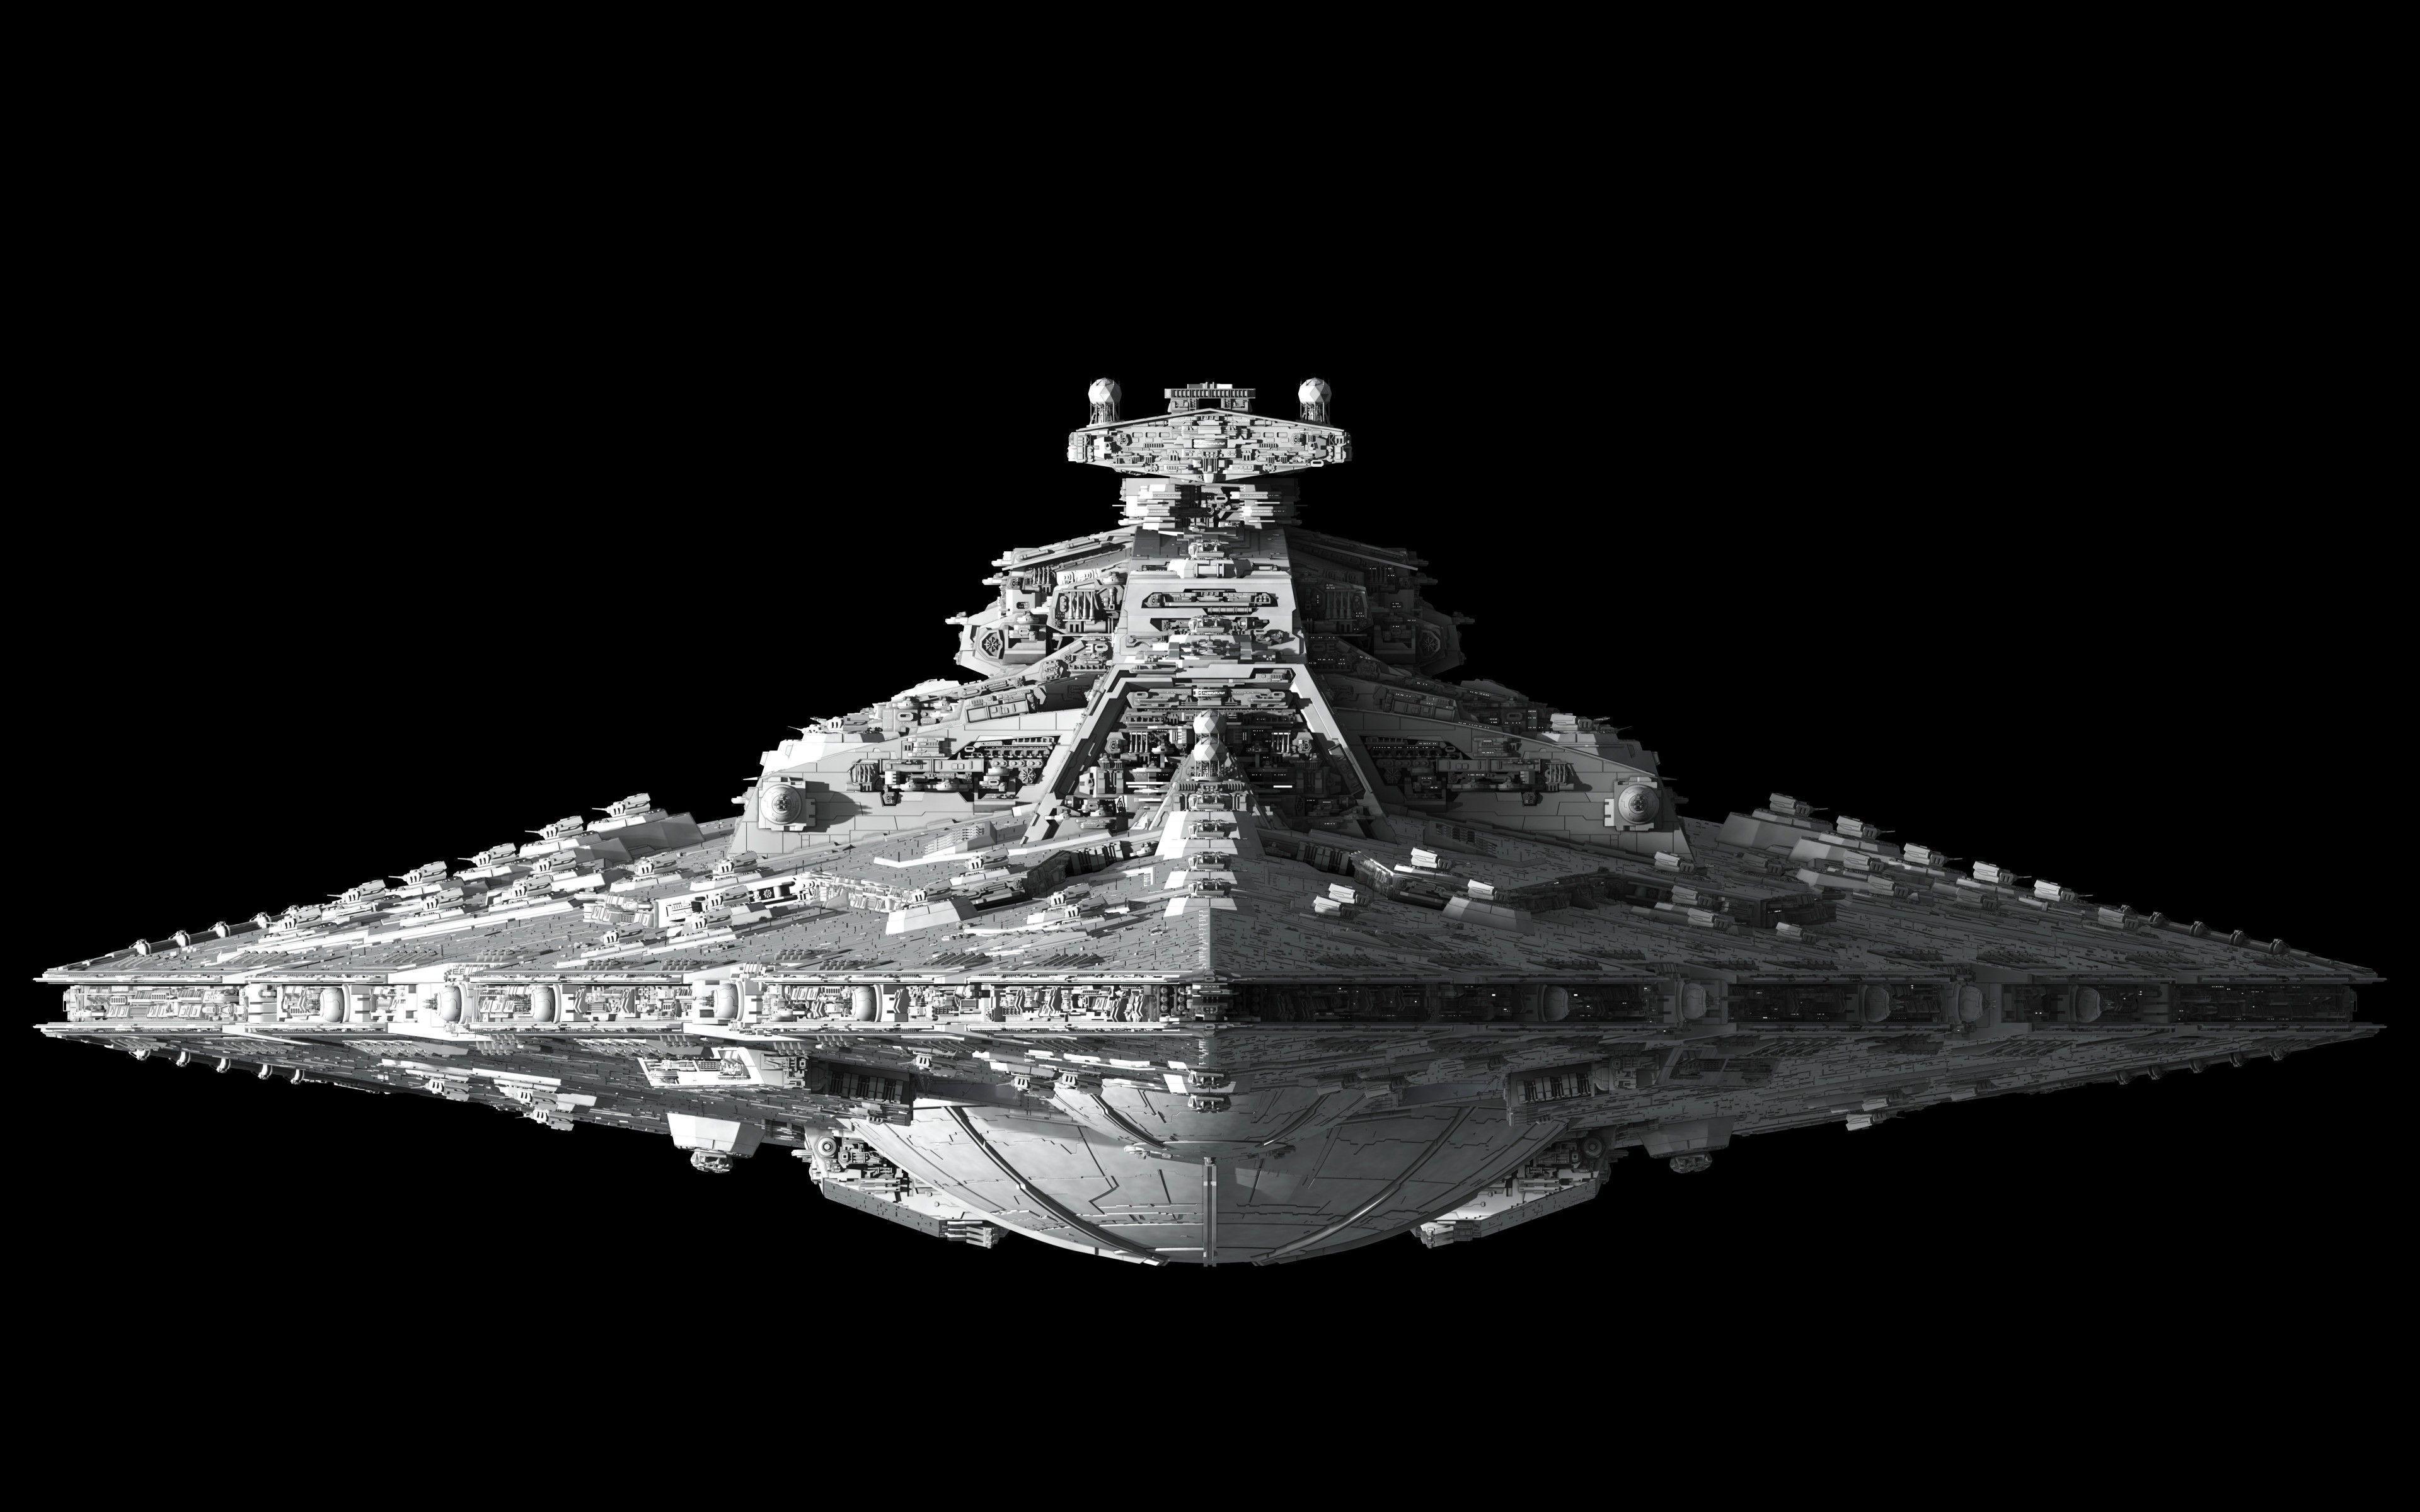 Sci Fi Star Wars Wars Spaceship Spacecraft 3D Cg Digital Art